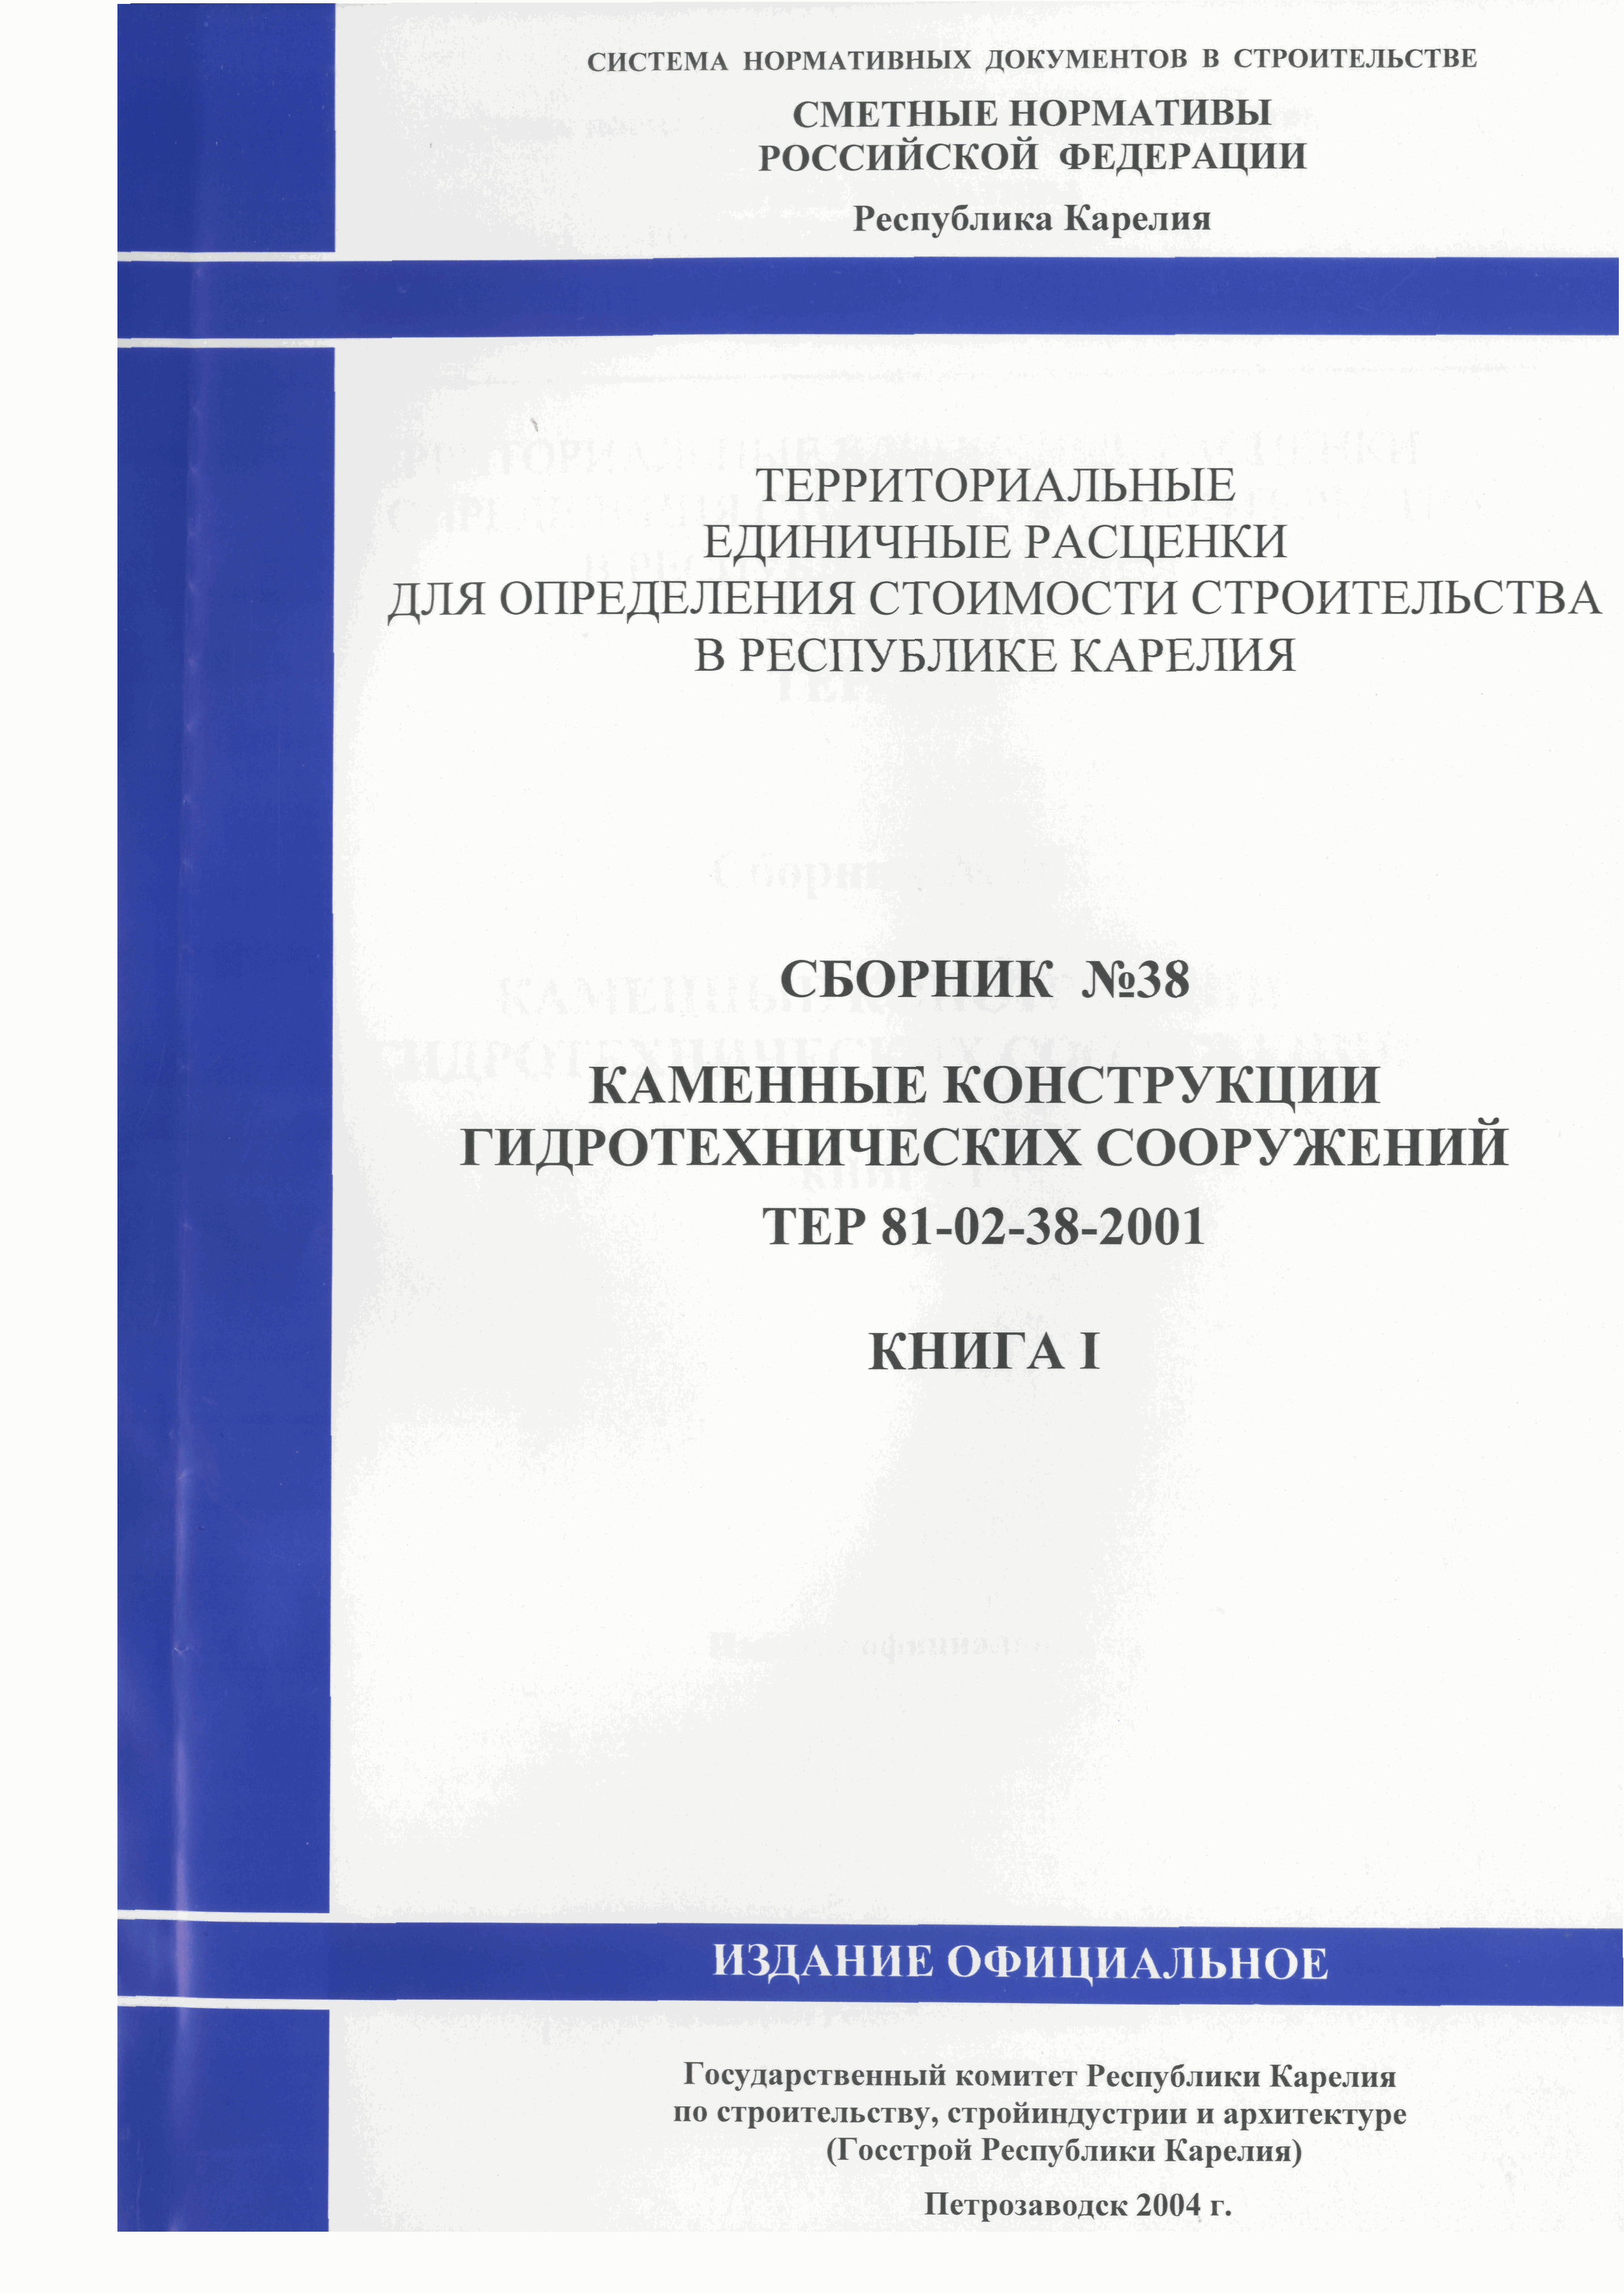 ТЕР Республика Карелия 2001-38